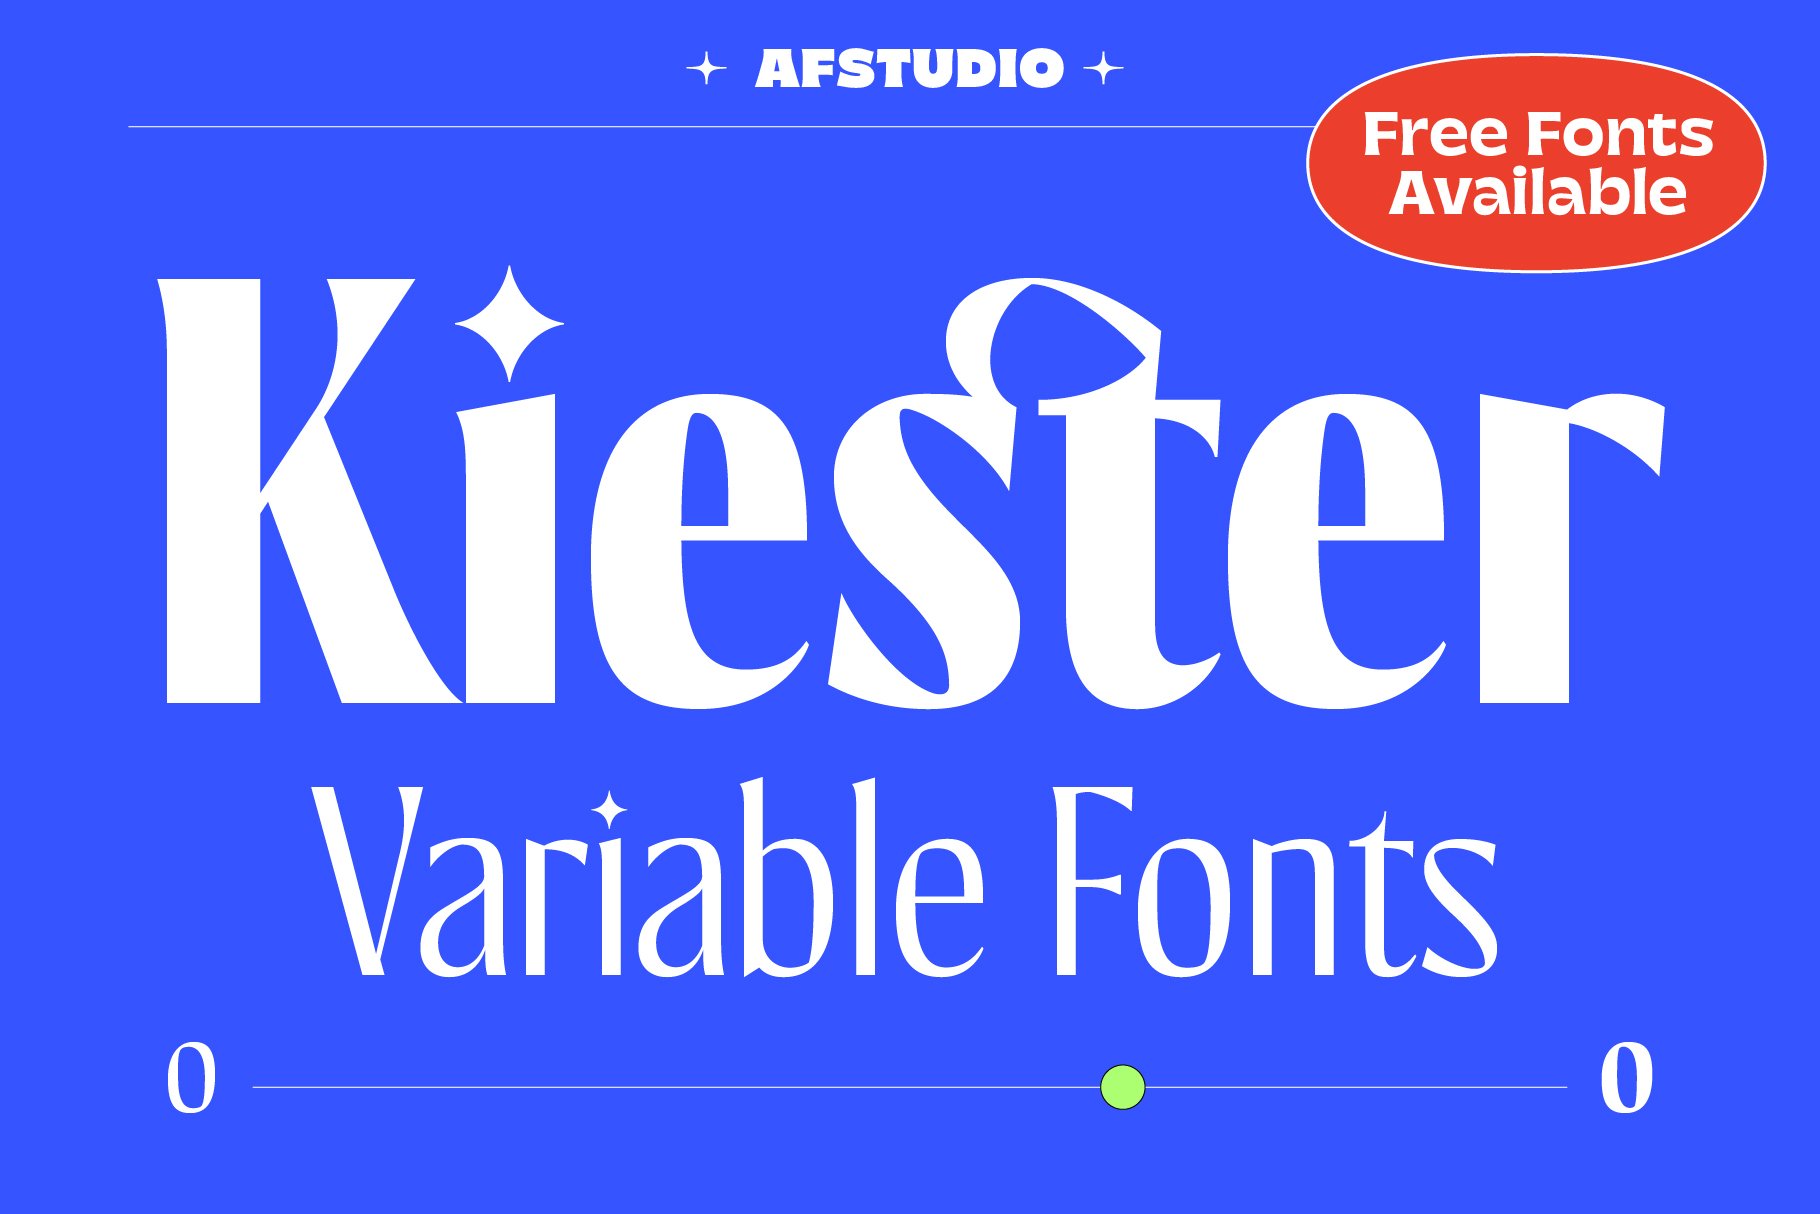 Kiester - Variable Display cover image.